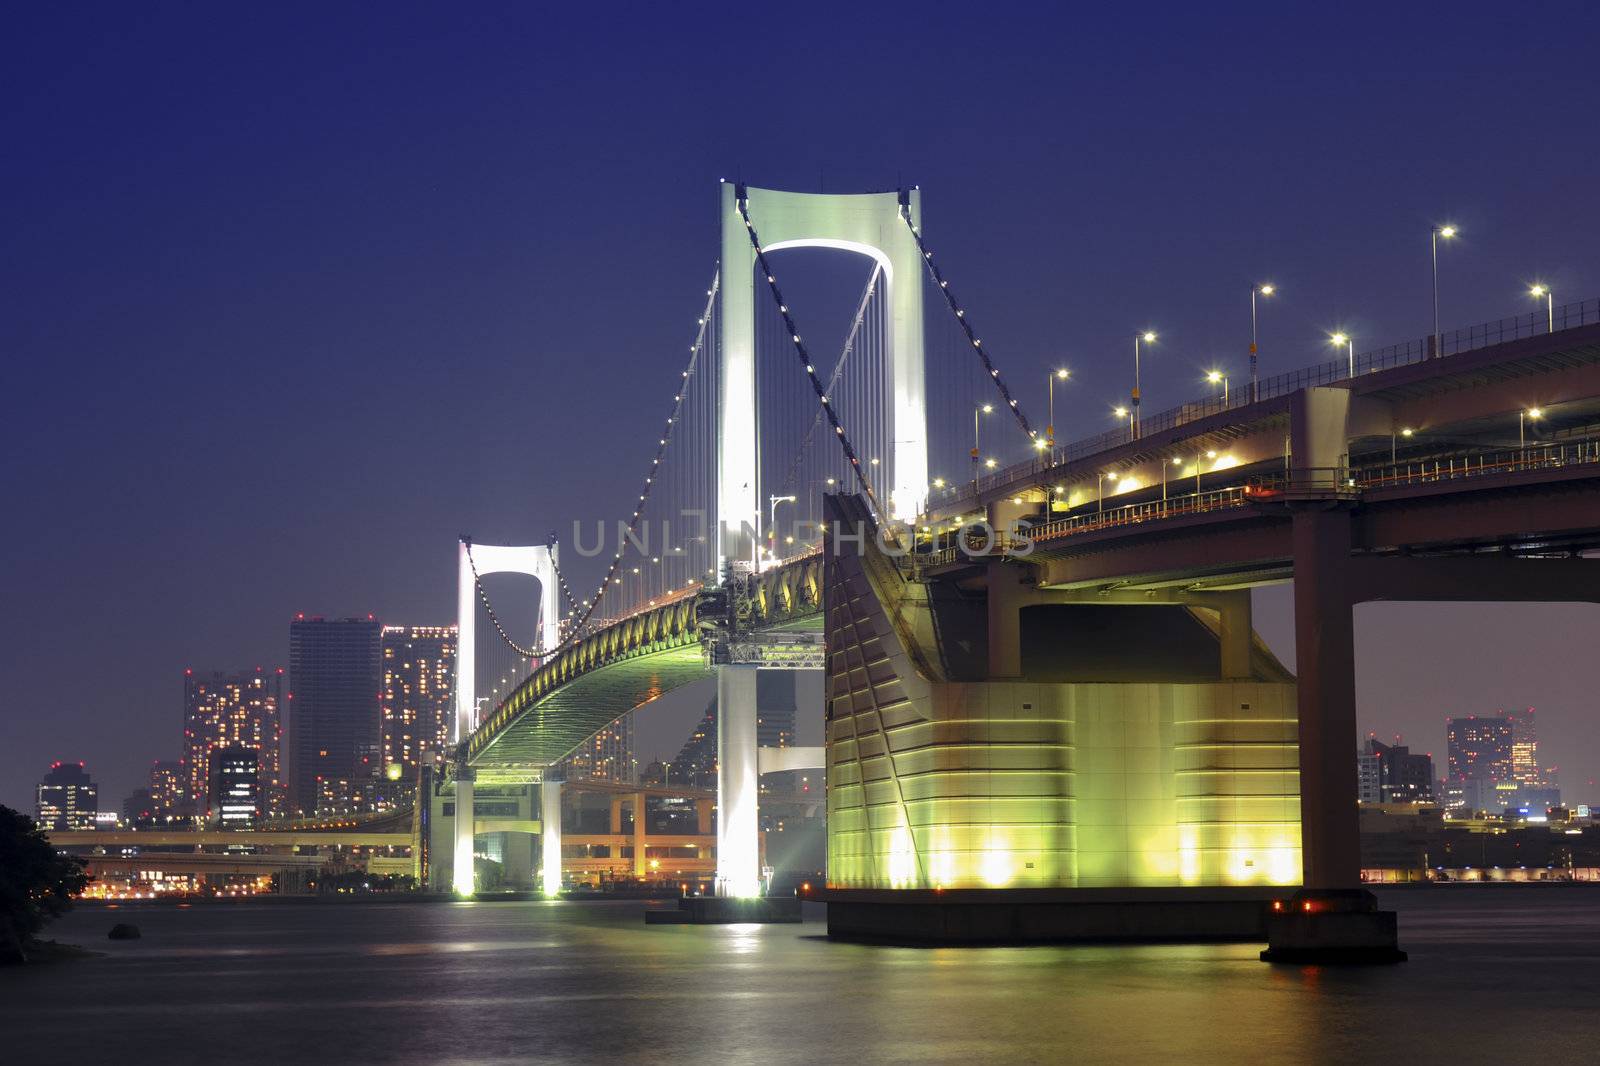 one of famous Tokyo landmarks, Tokyo Rainbow bridge over bay waters with scenic night illumination